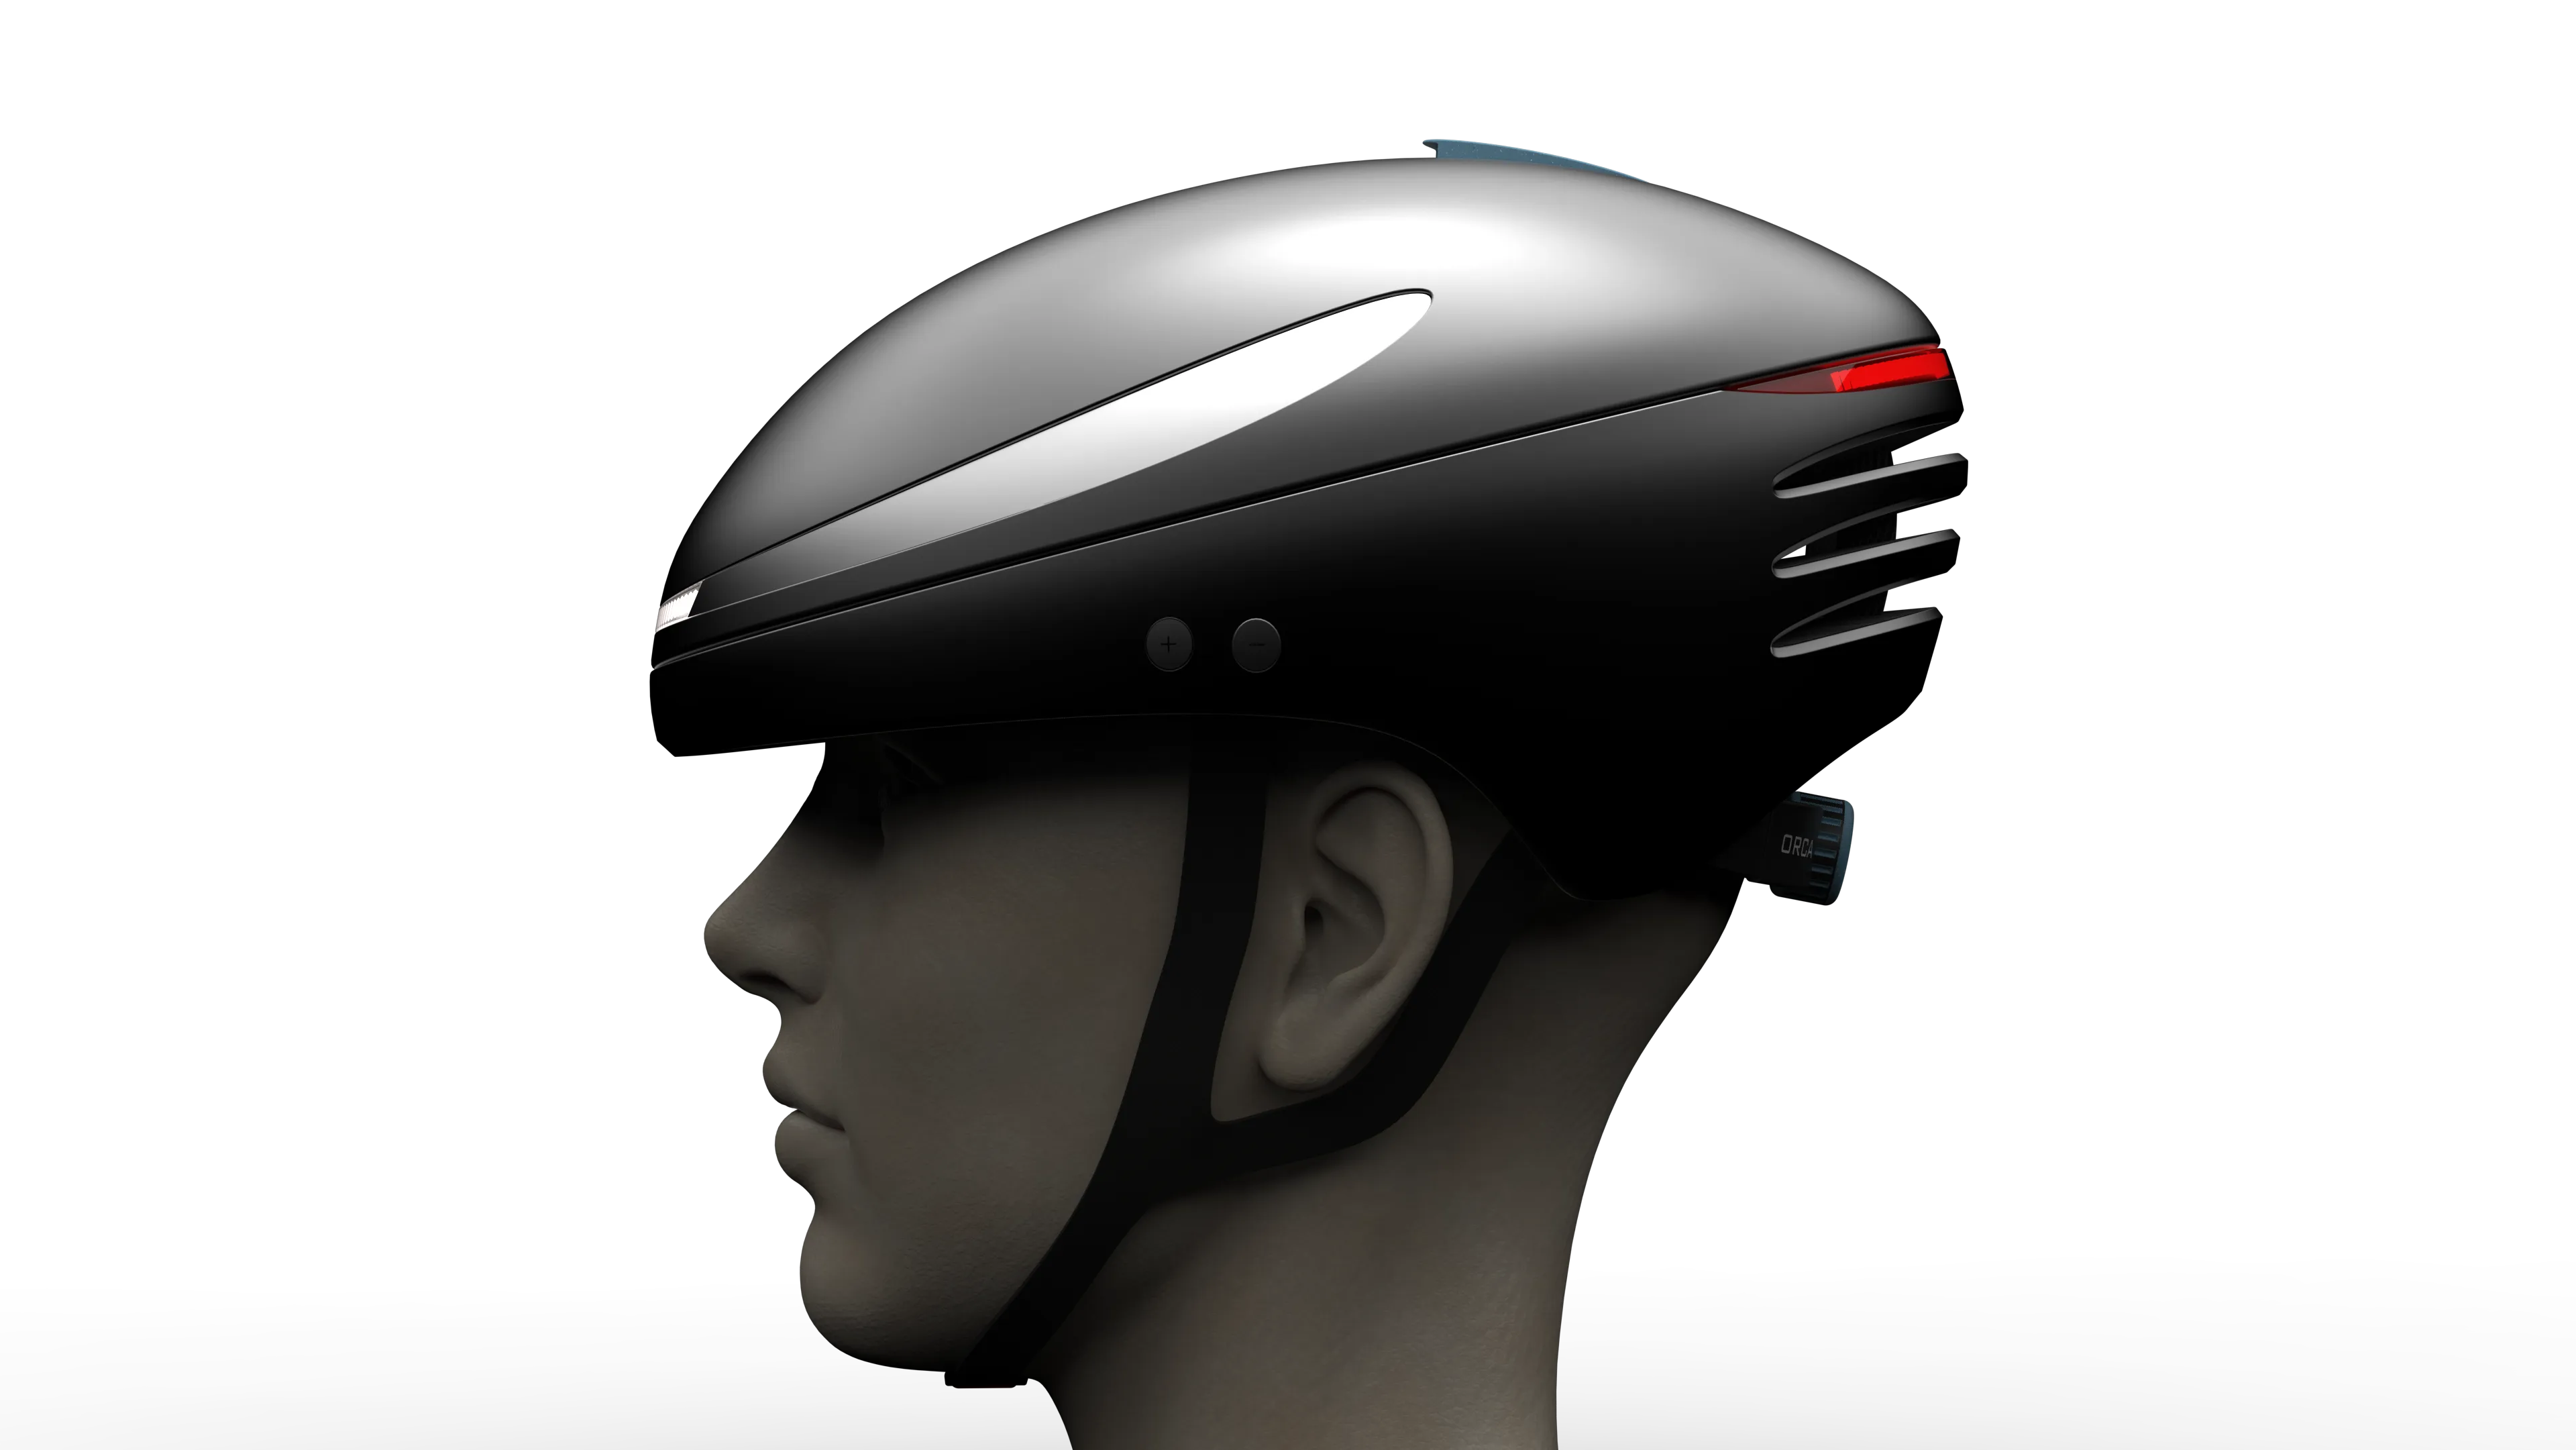 Smart biking-helmet